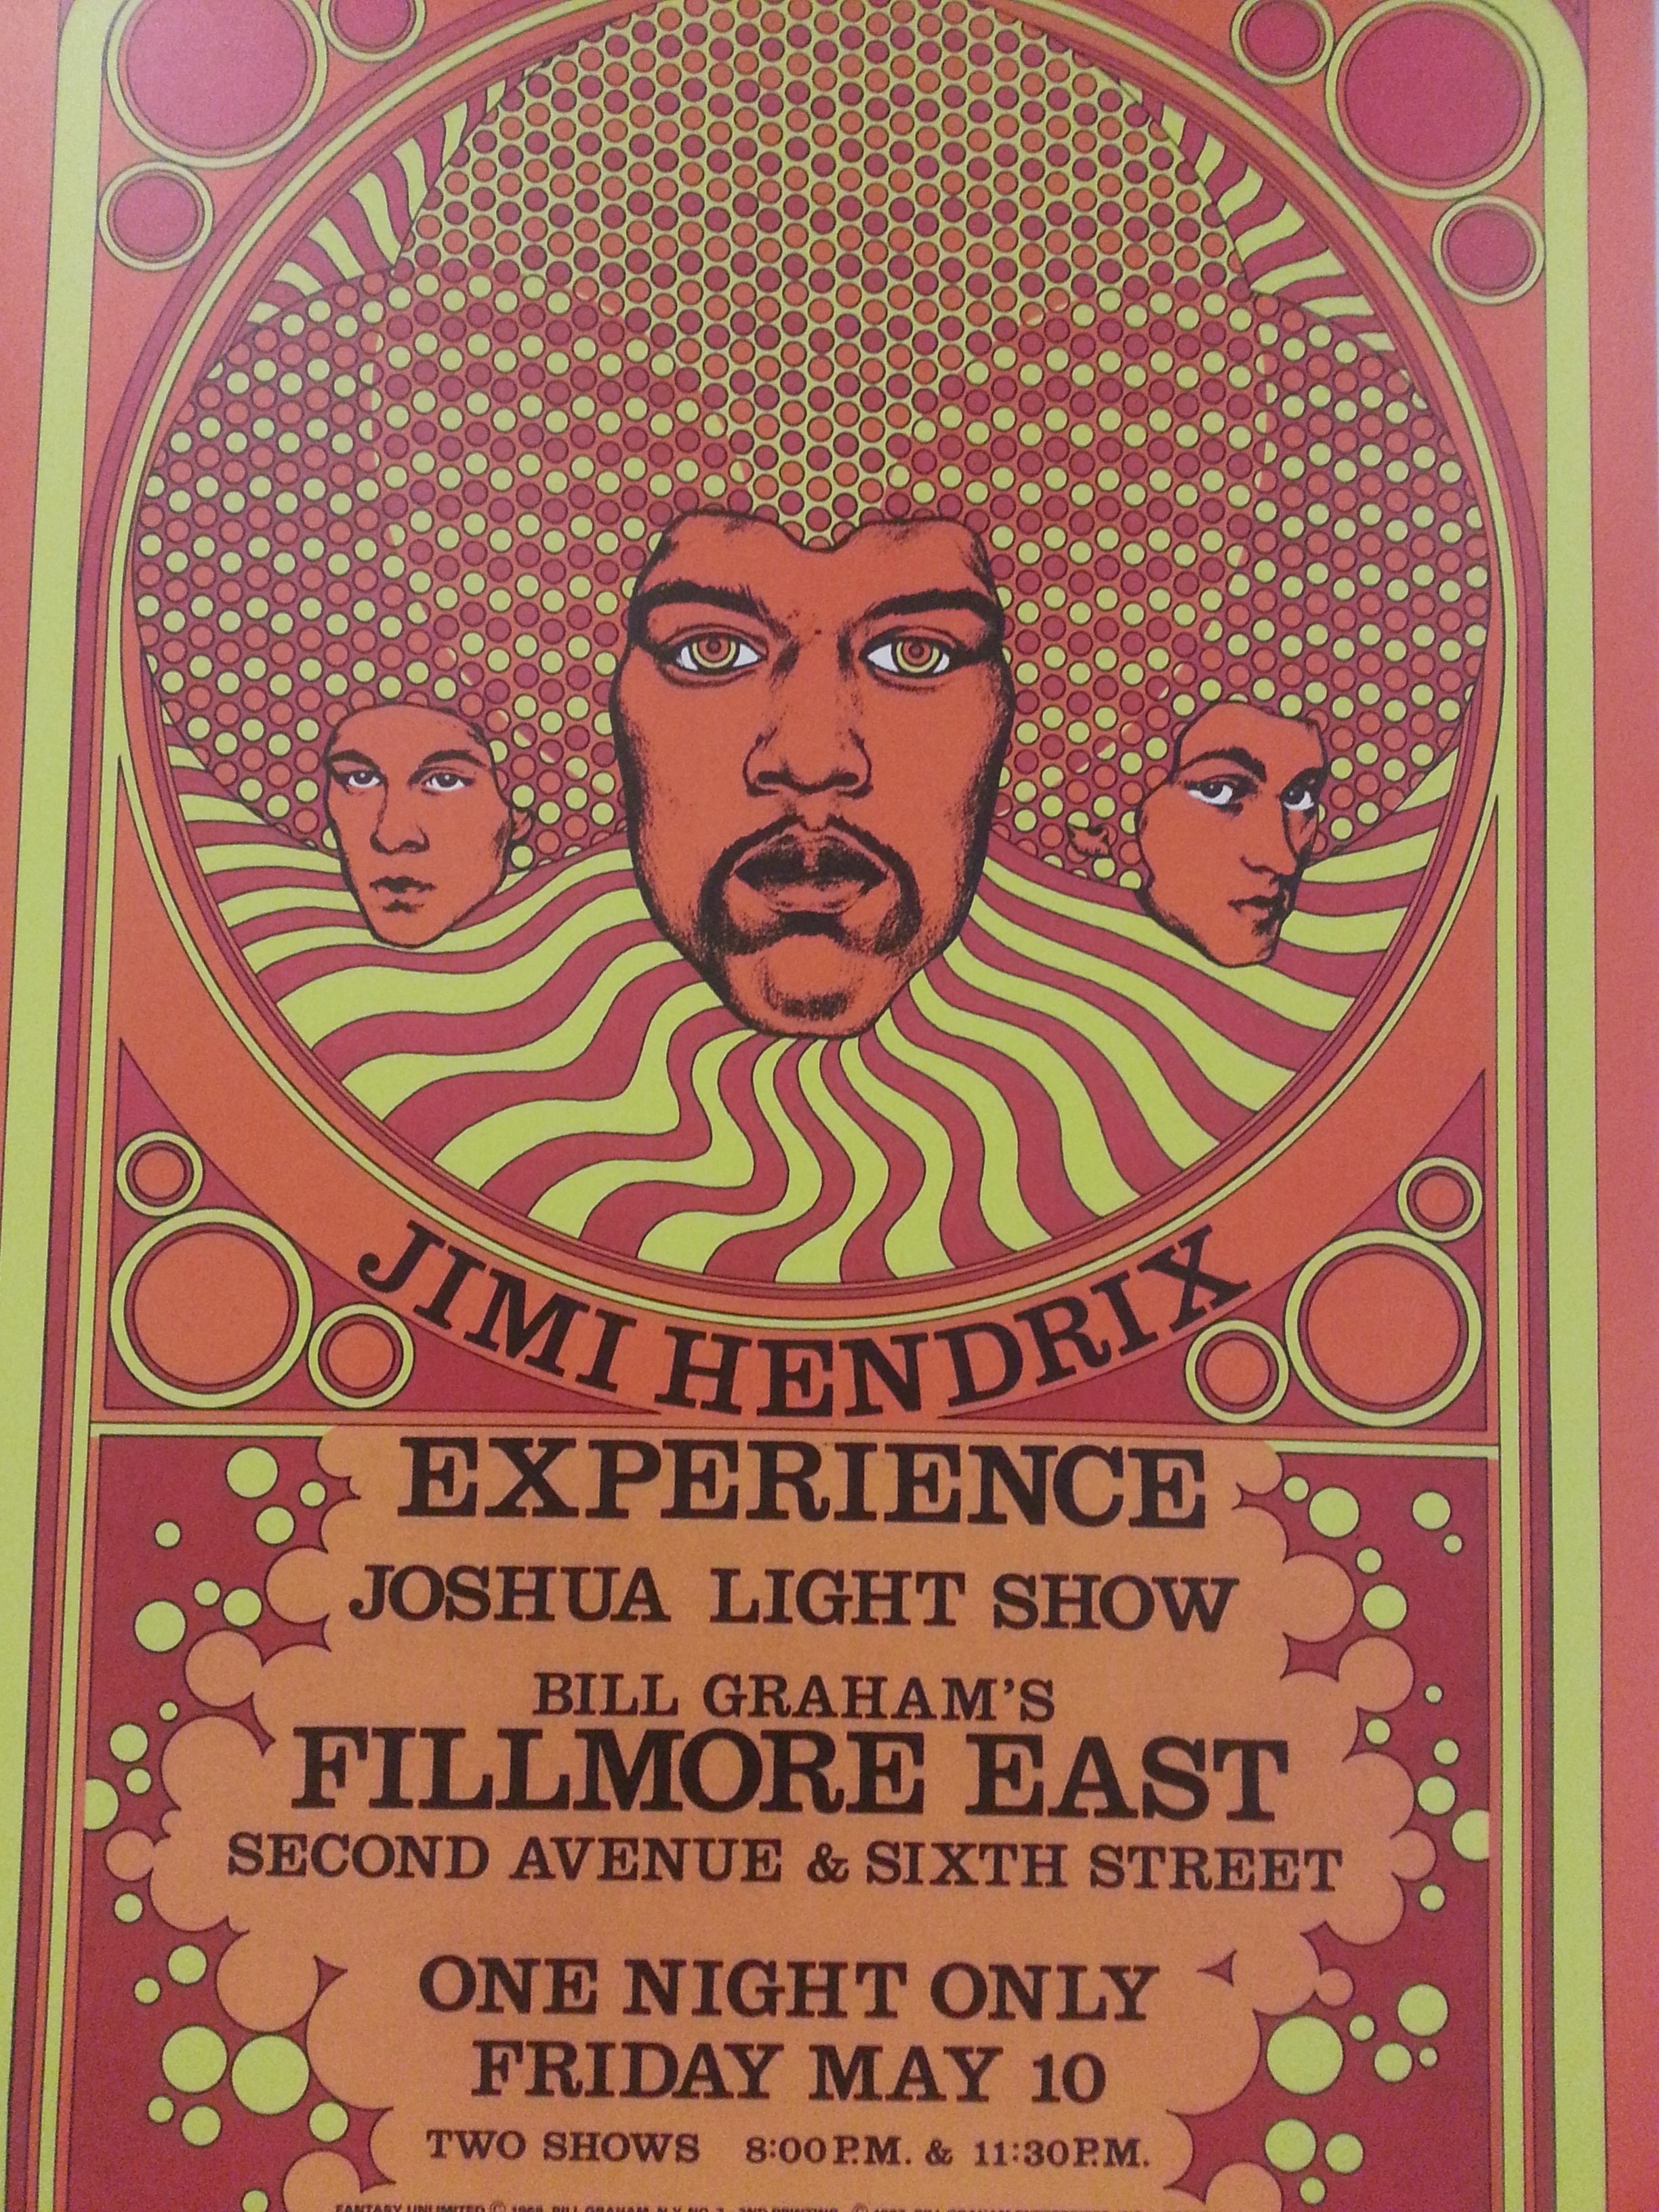 Cleveland: affiche Jimmy Hendrix ©Hibbs